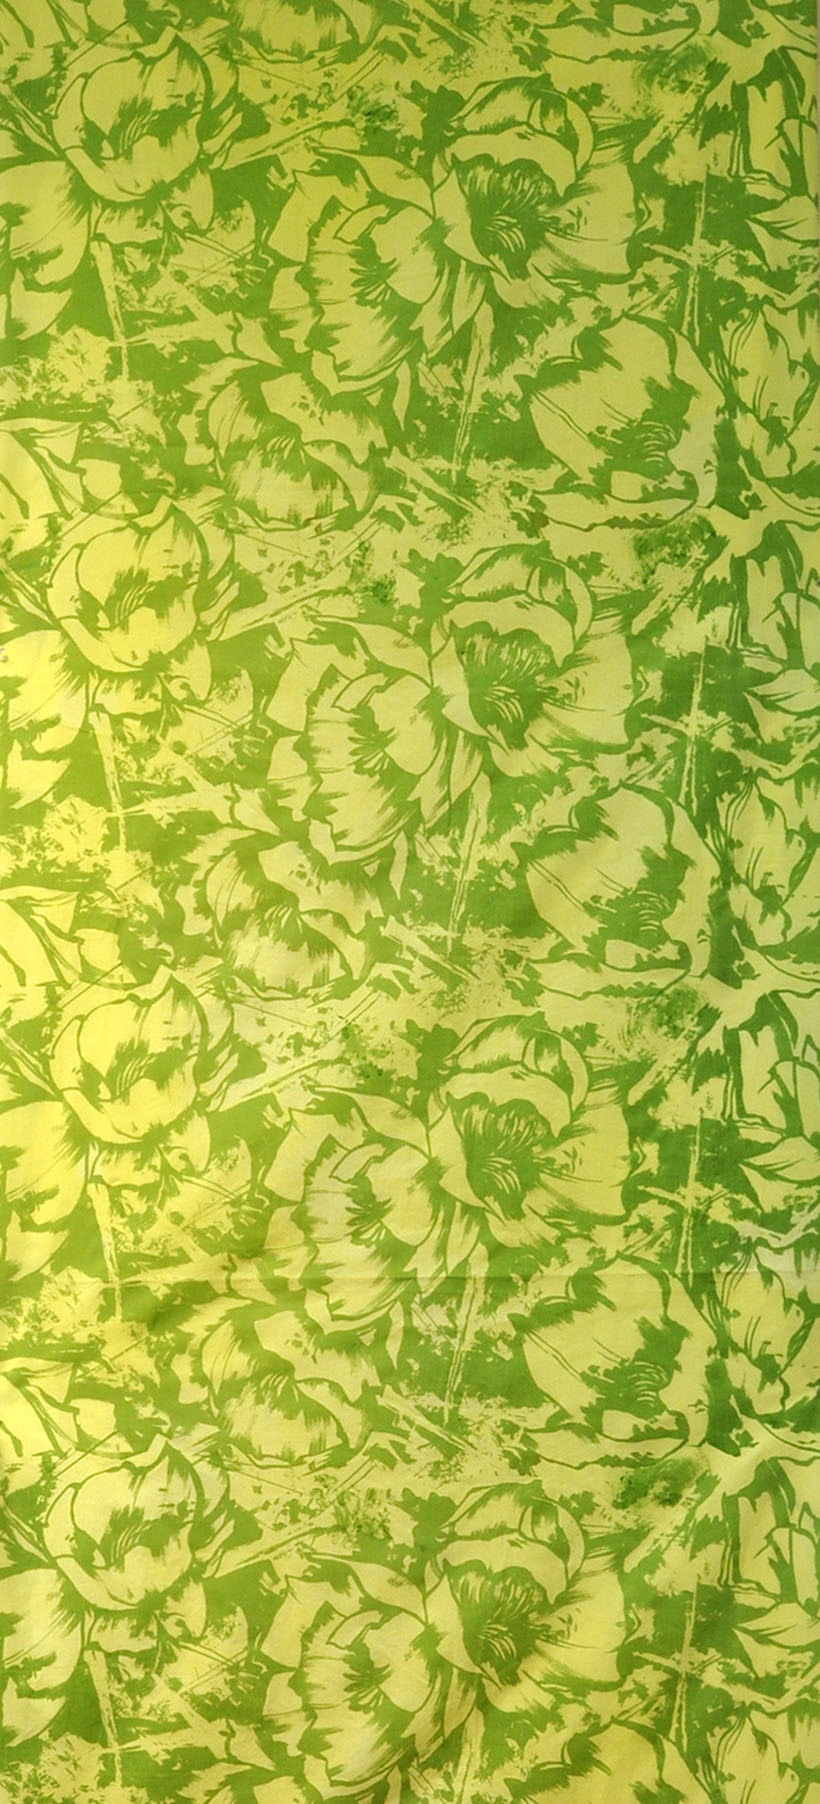 silkscreen fabric yardage cacti floral Nature textile